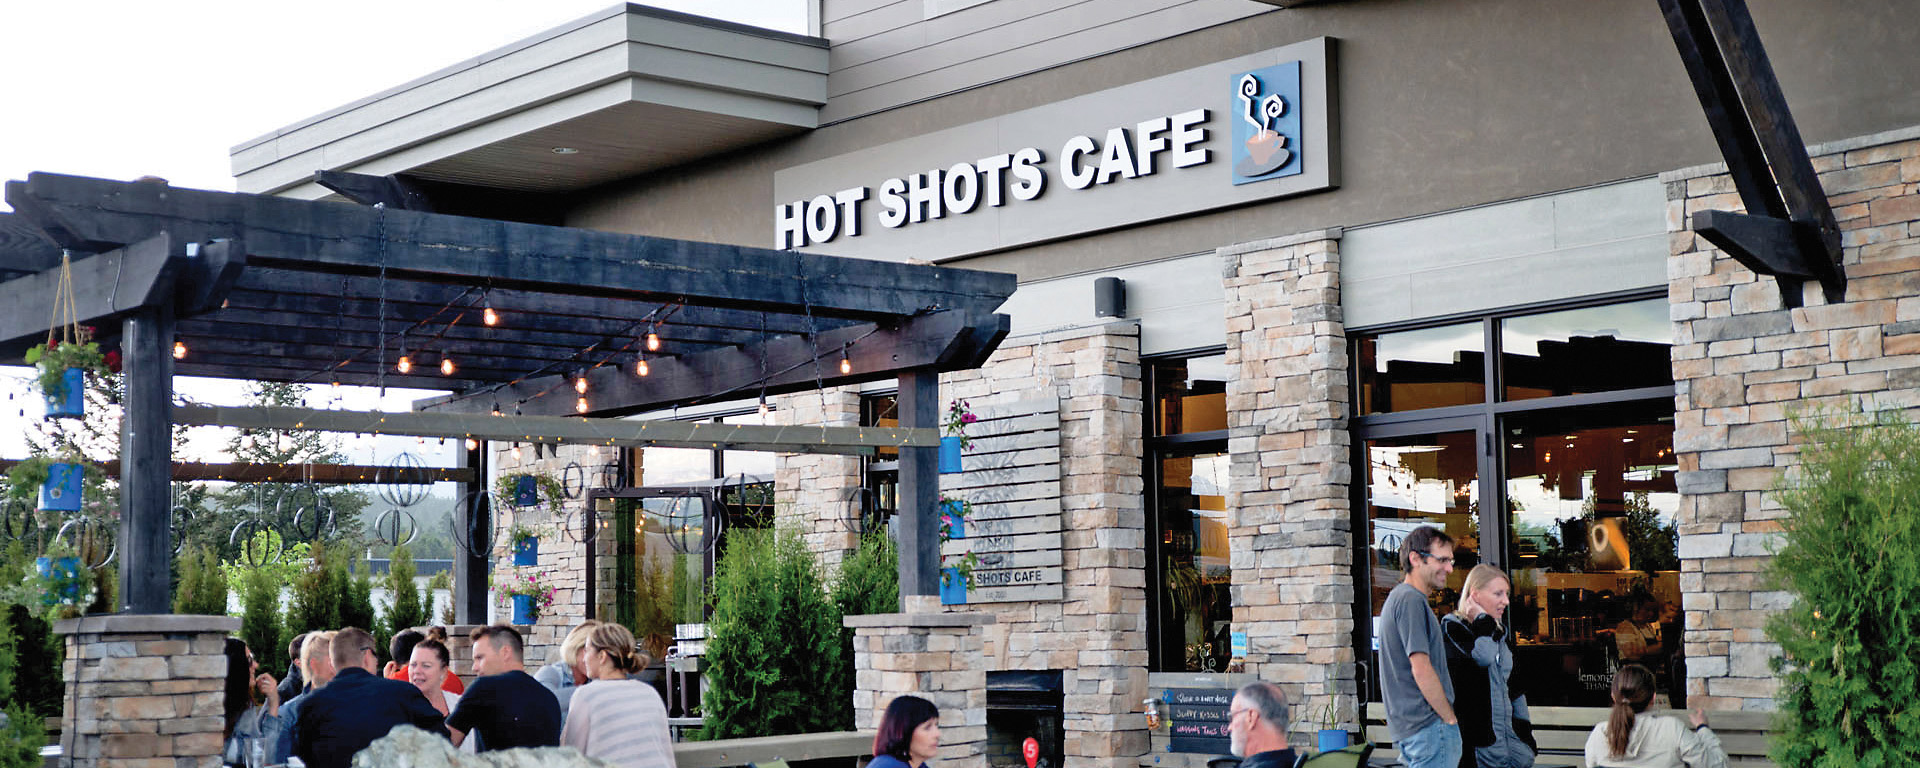 Exterior of Hot Shots Cafe in Cranbrook 